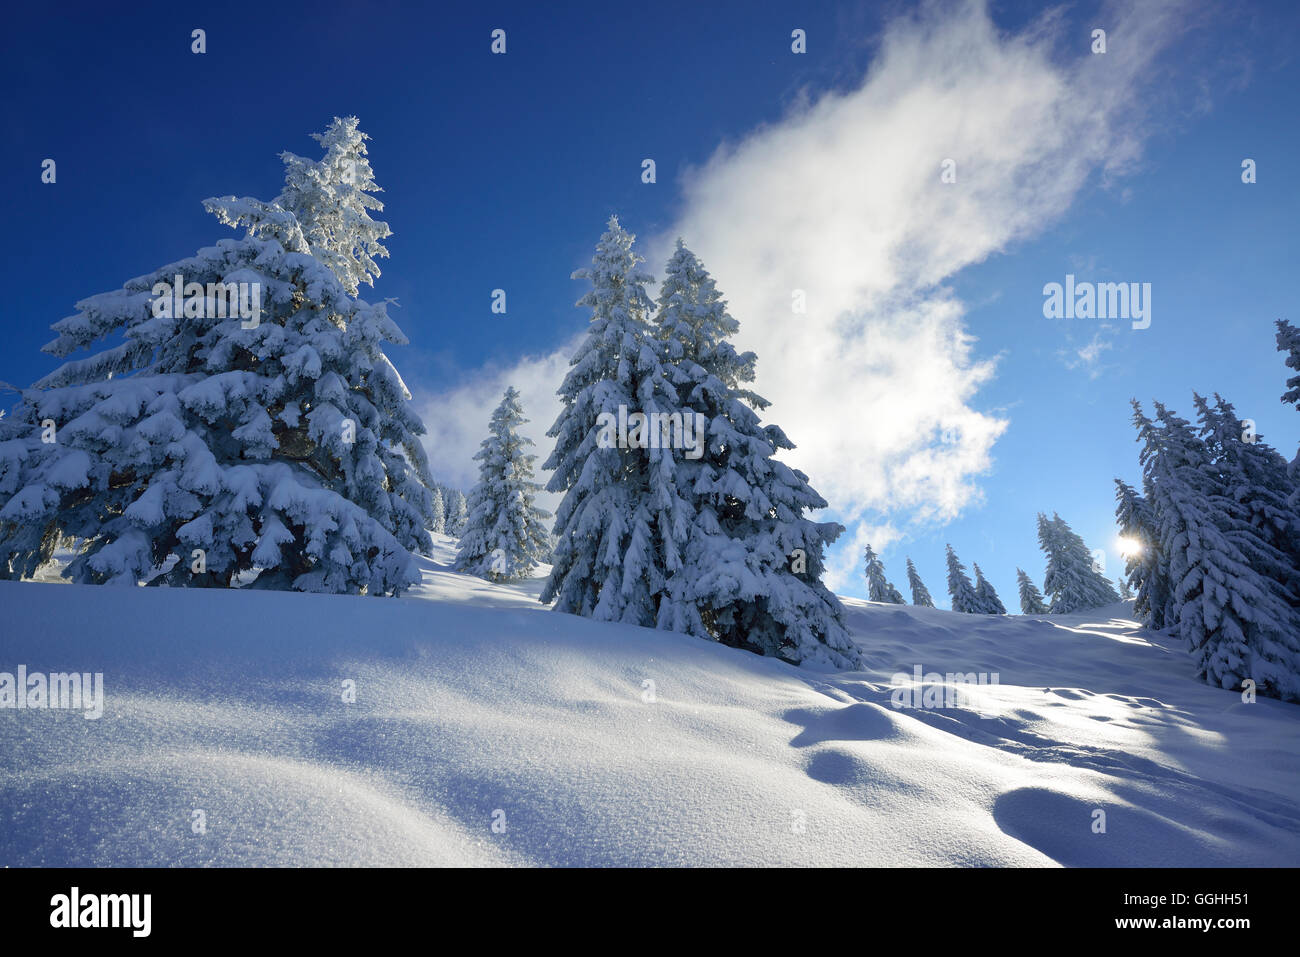 Snow-covered coniferous trees, Bavarian Alps, Upper Bavaria, Germany Stock Photo